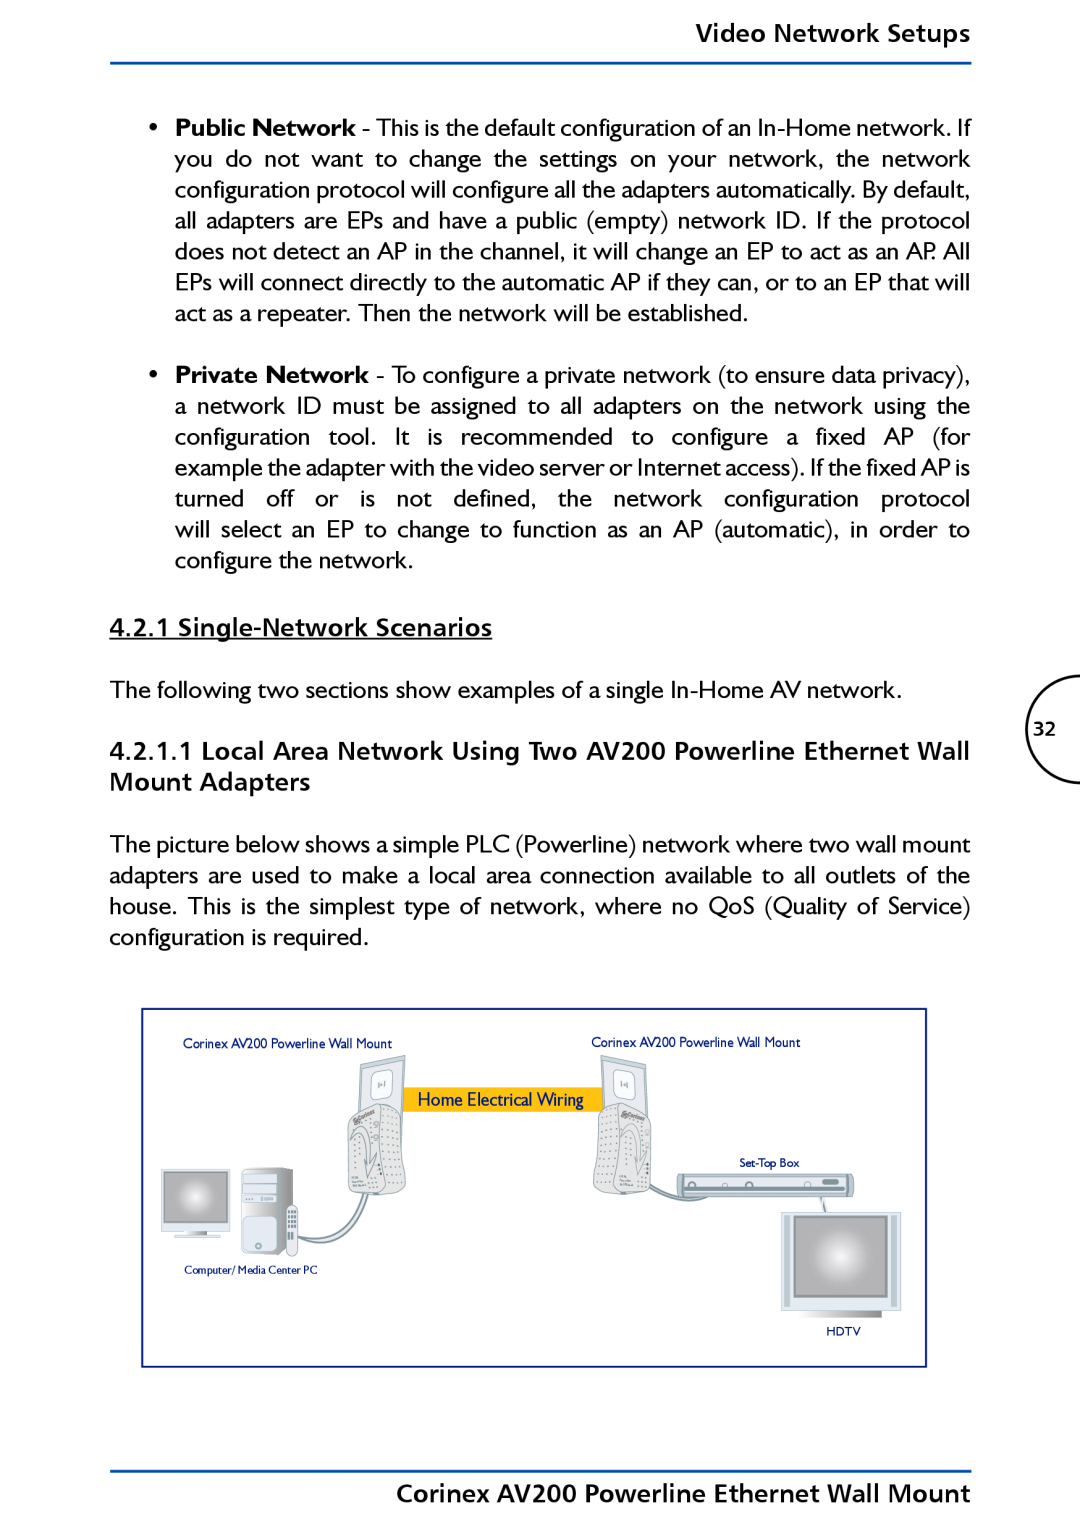 DeWalt manual Single-Network Scenarios, Video Network Setups, Corinex AV200 Powerline Ethernet Wall Mount 